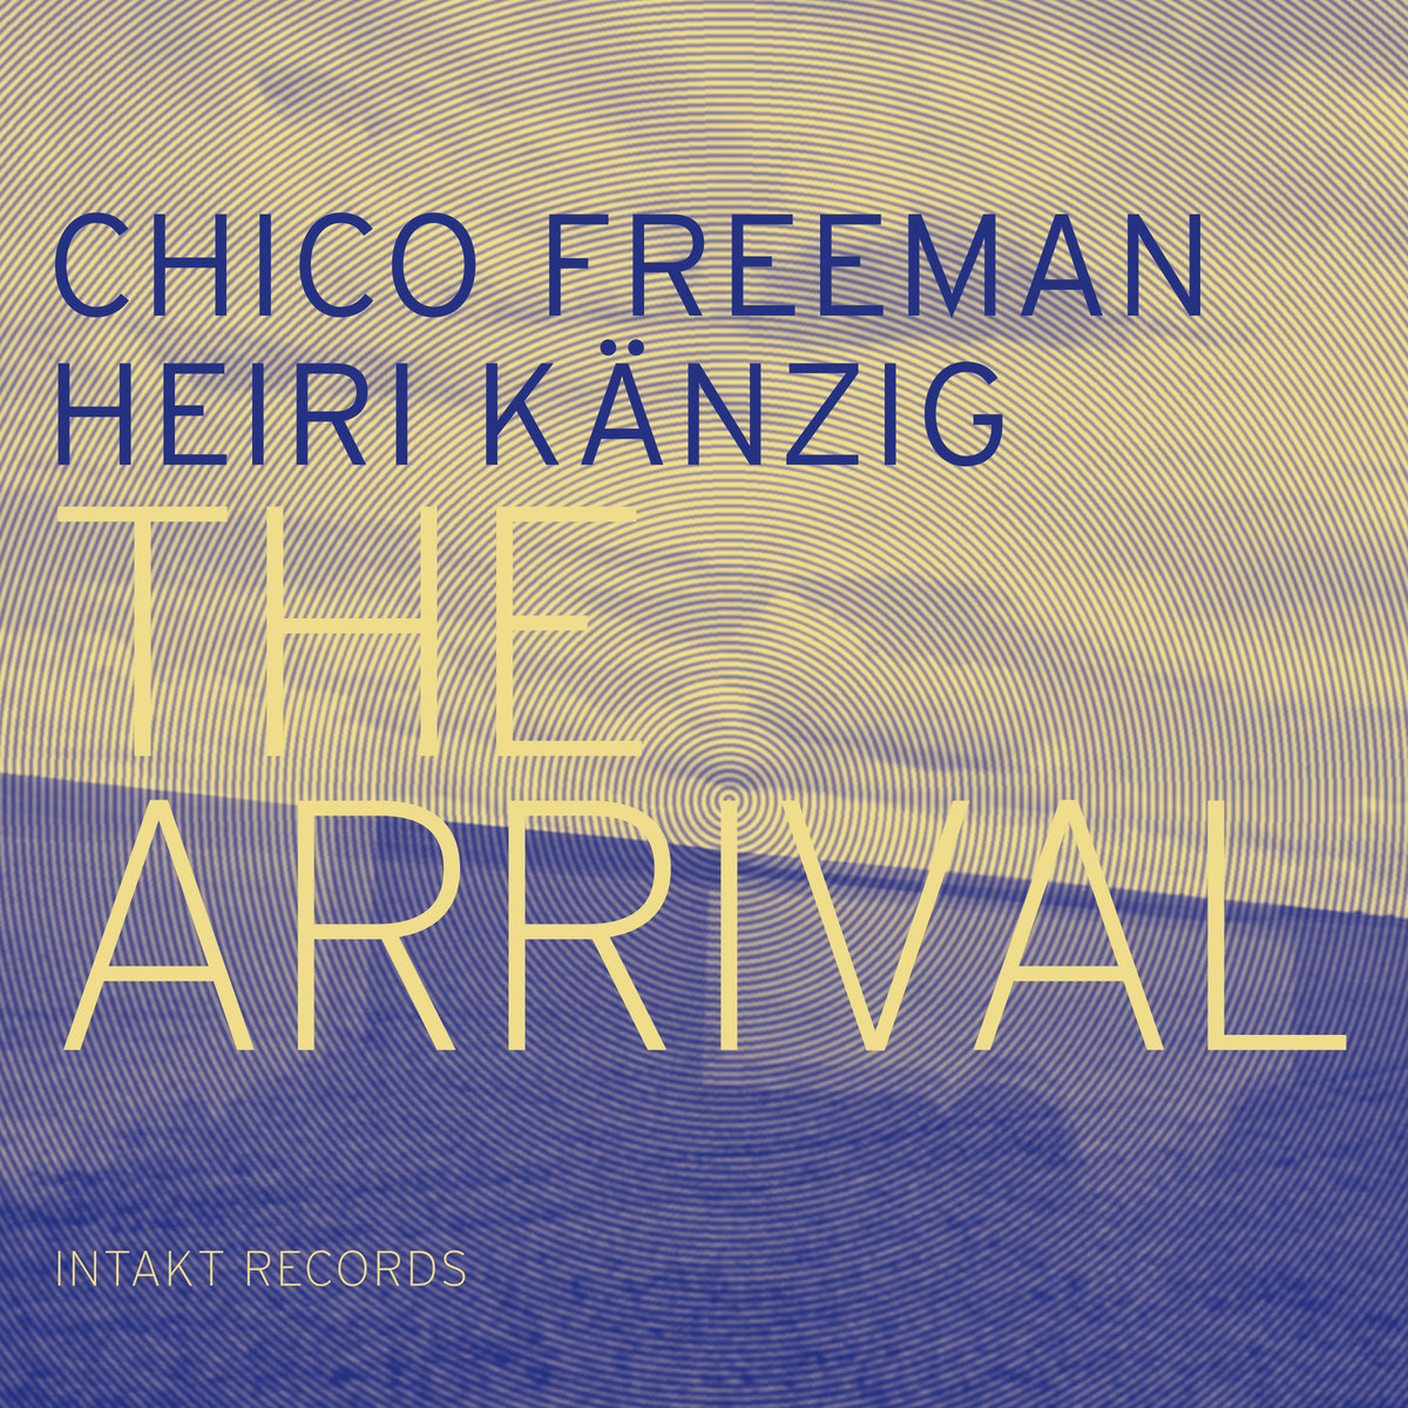 Chico Freeman & Heiri Känzig; "The Essence of Silence"; Intakt Records (dettaglio copertina)